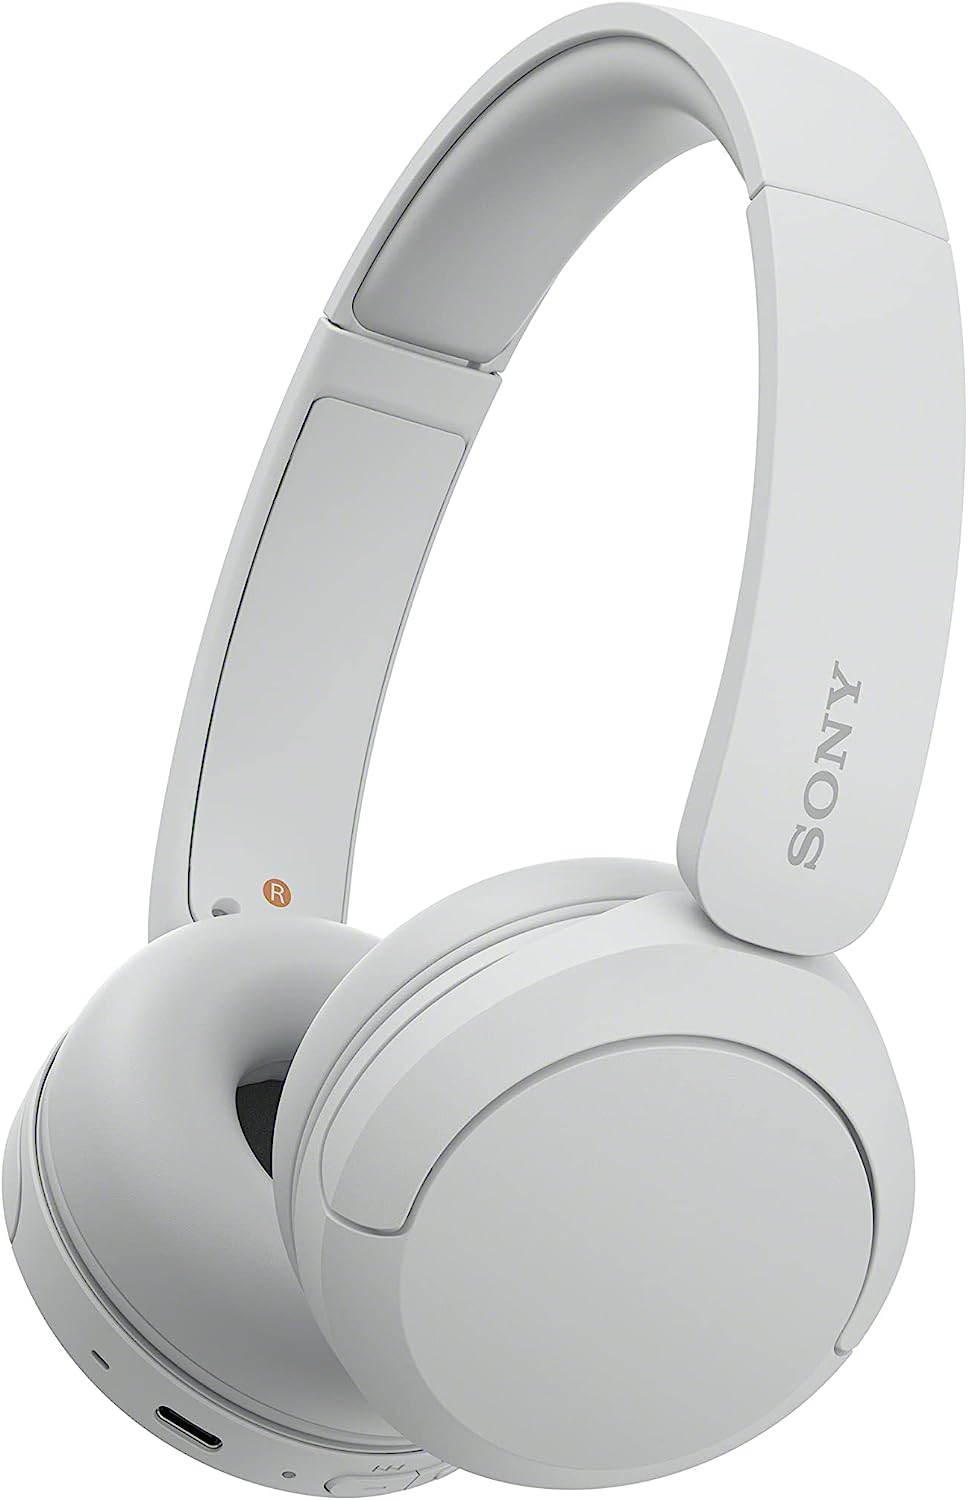 Sony WH-CH520 Over-Ear Wireless Headphones